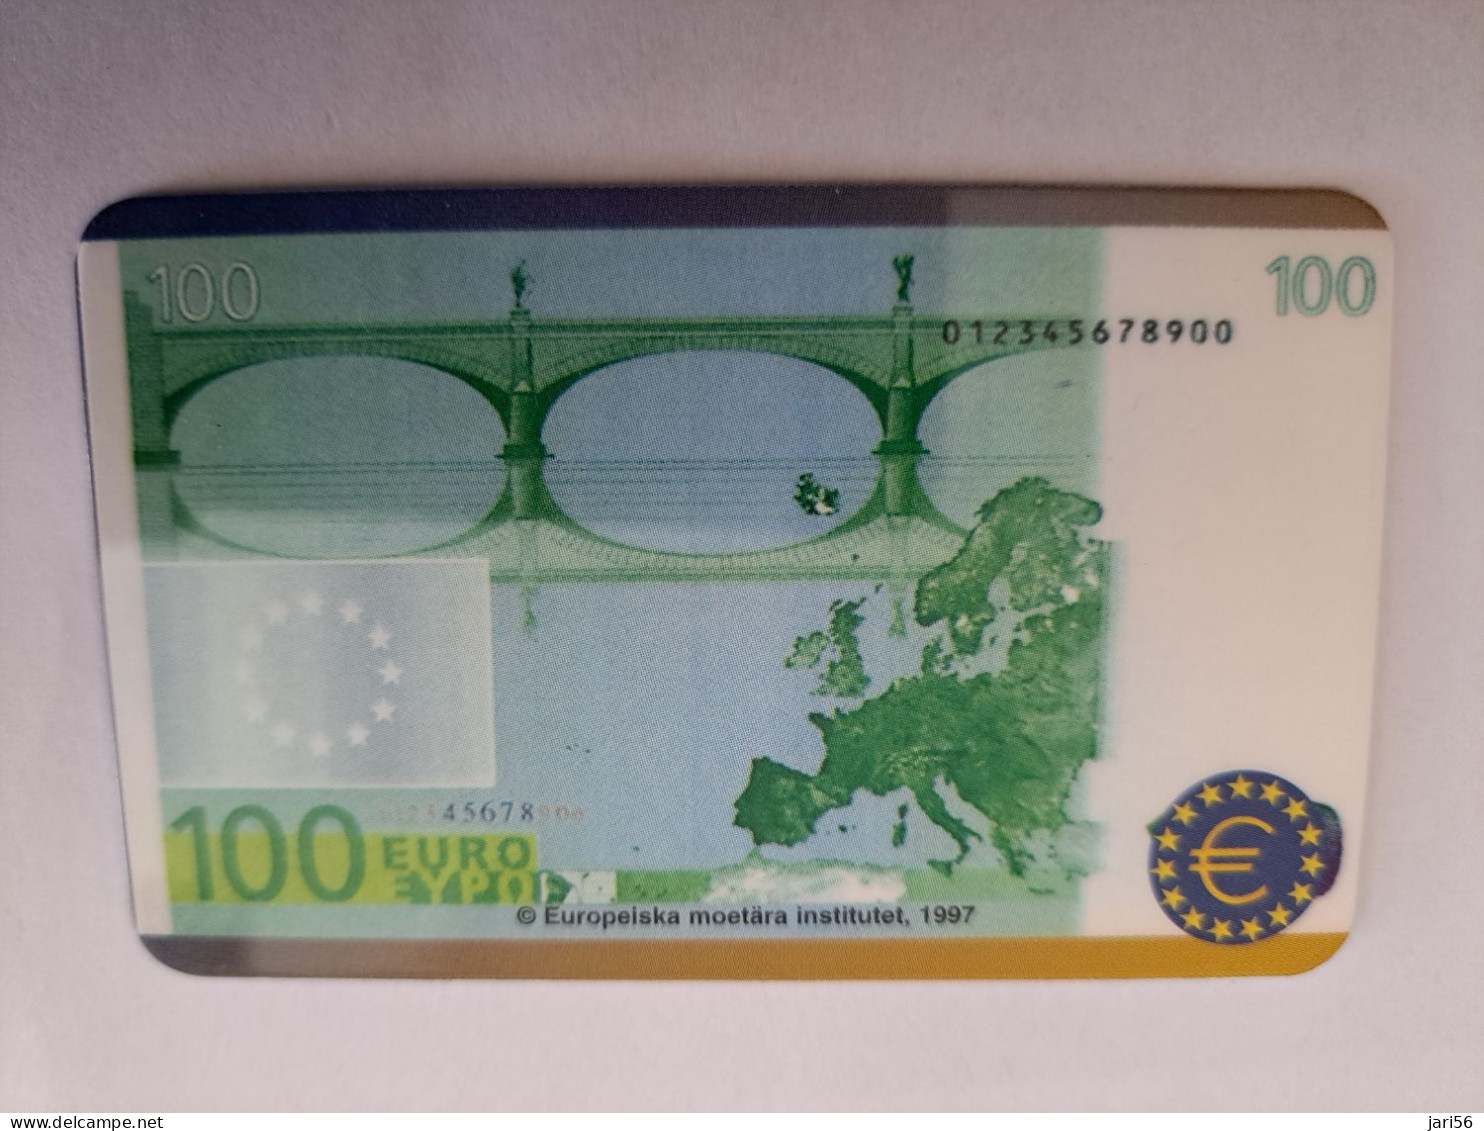 GREAT BRITAIN   20 UNITS   / EURO COINS/ BILJET 100 EURO    (date 09/ 98)  PREPAID CARD / MINT      **13308** - Collezioni